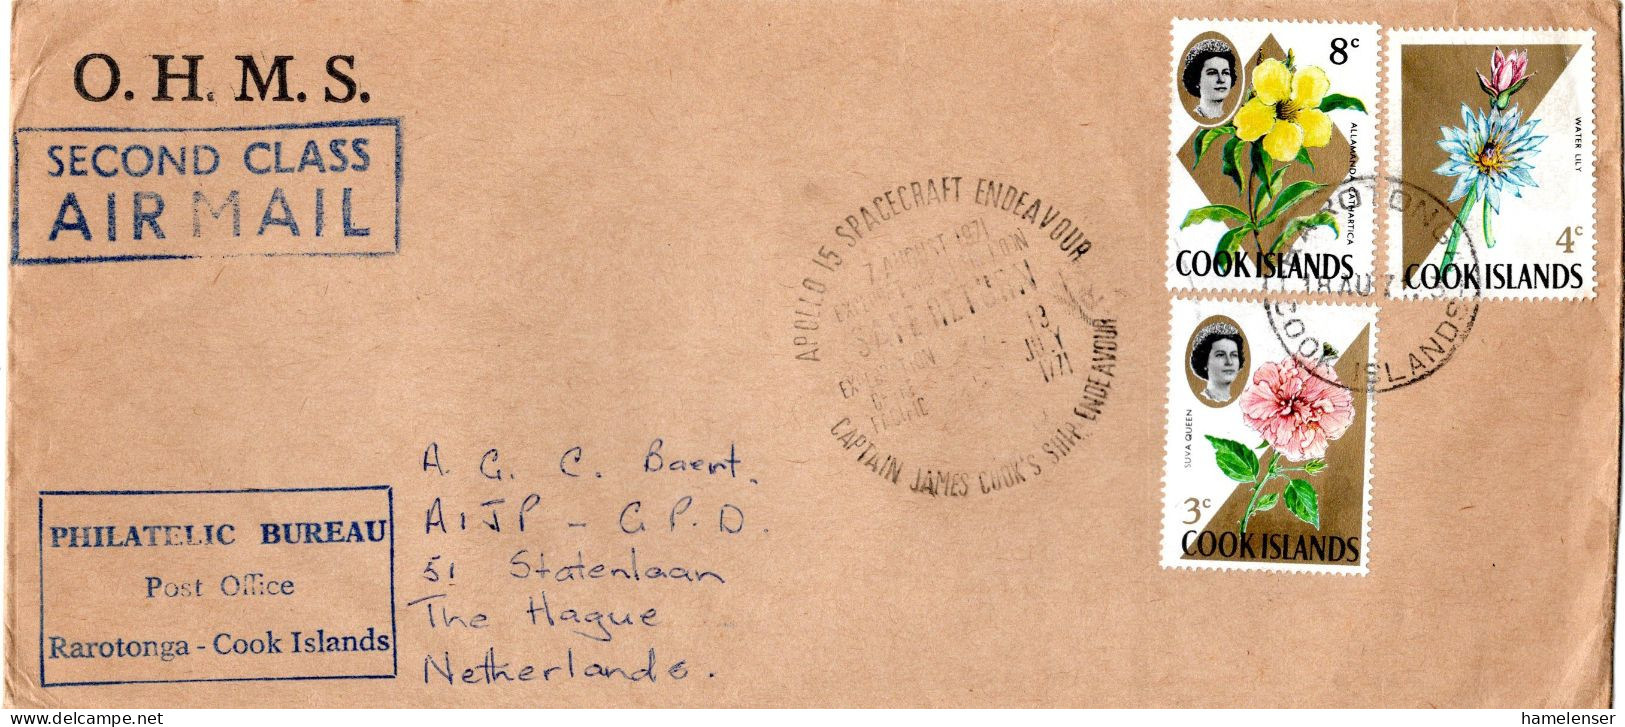 L75047 - Cook-Inseln - 1971 - 8c Blumen MiF A LpBf RAROTONGA -> Niederlande - Cook